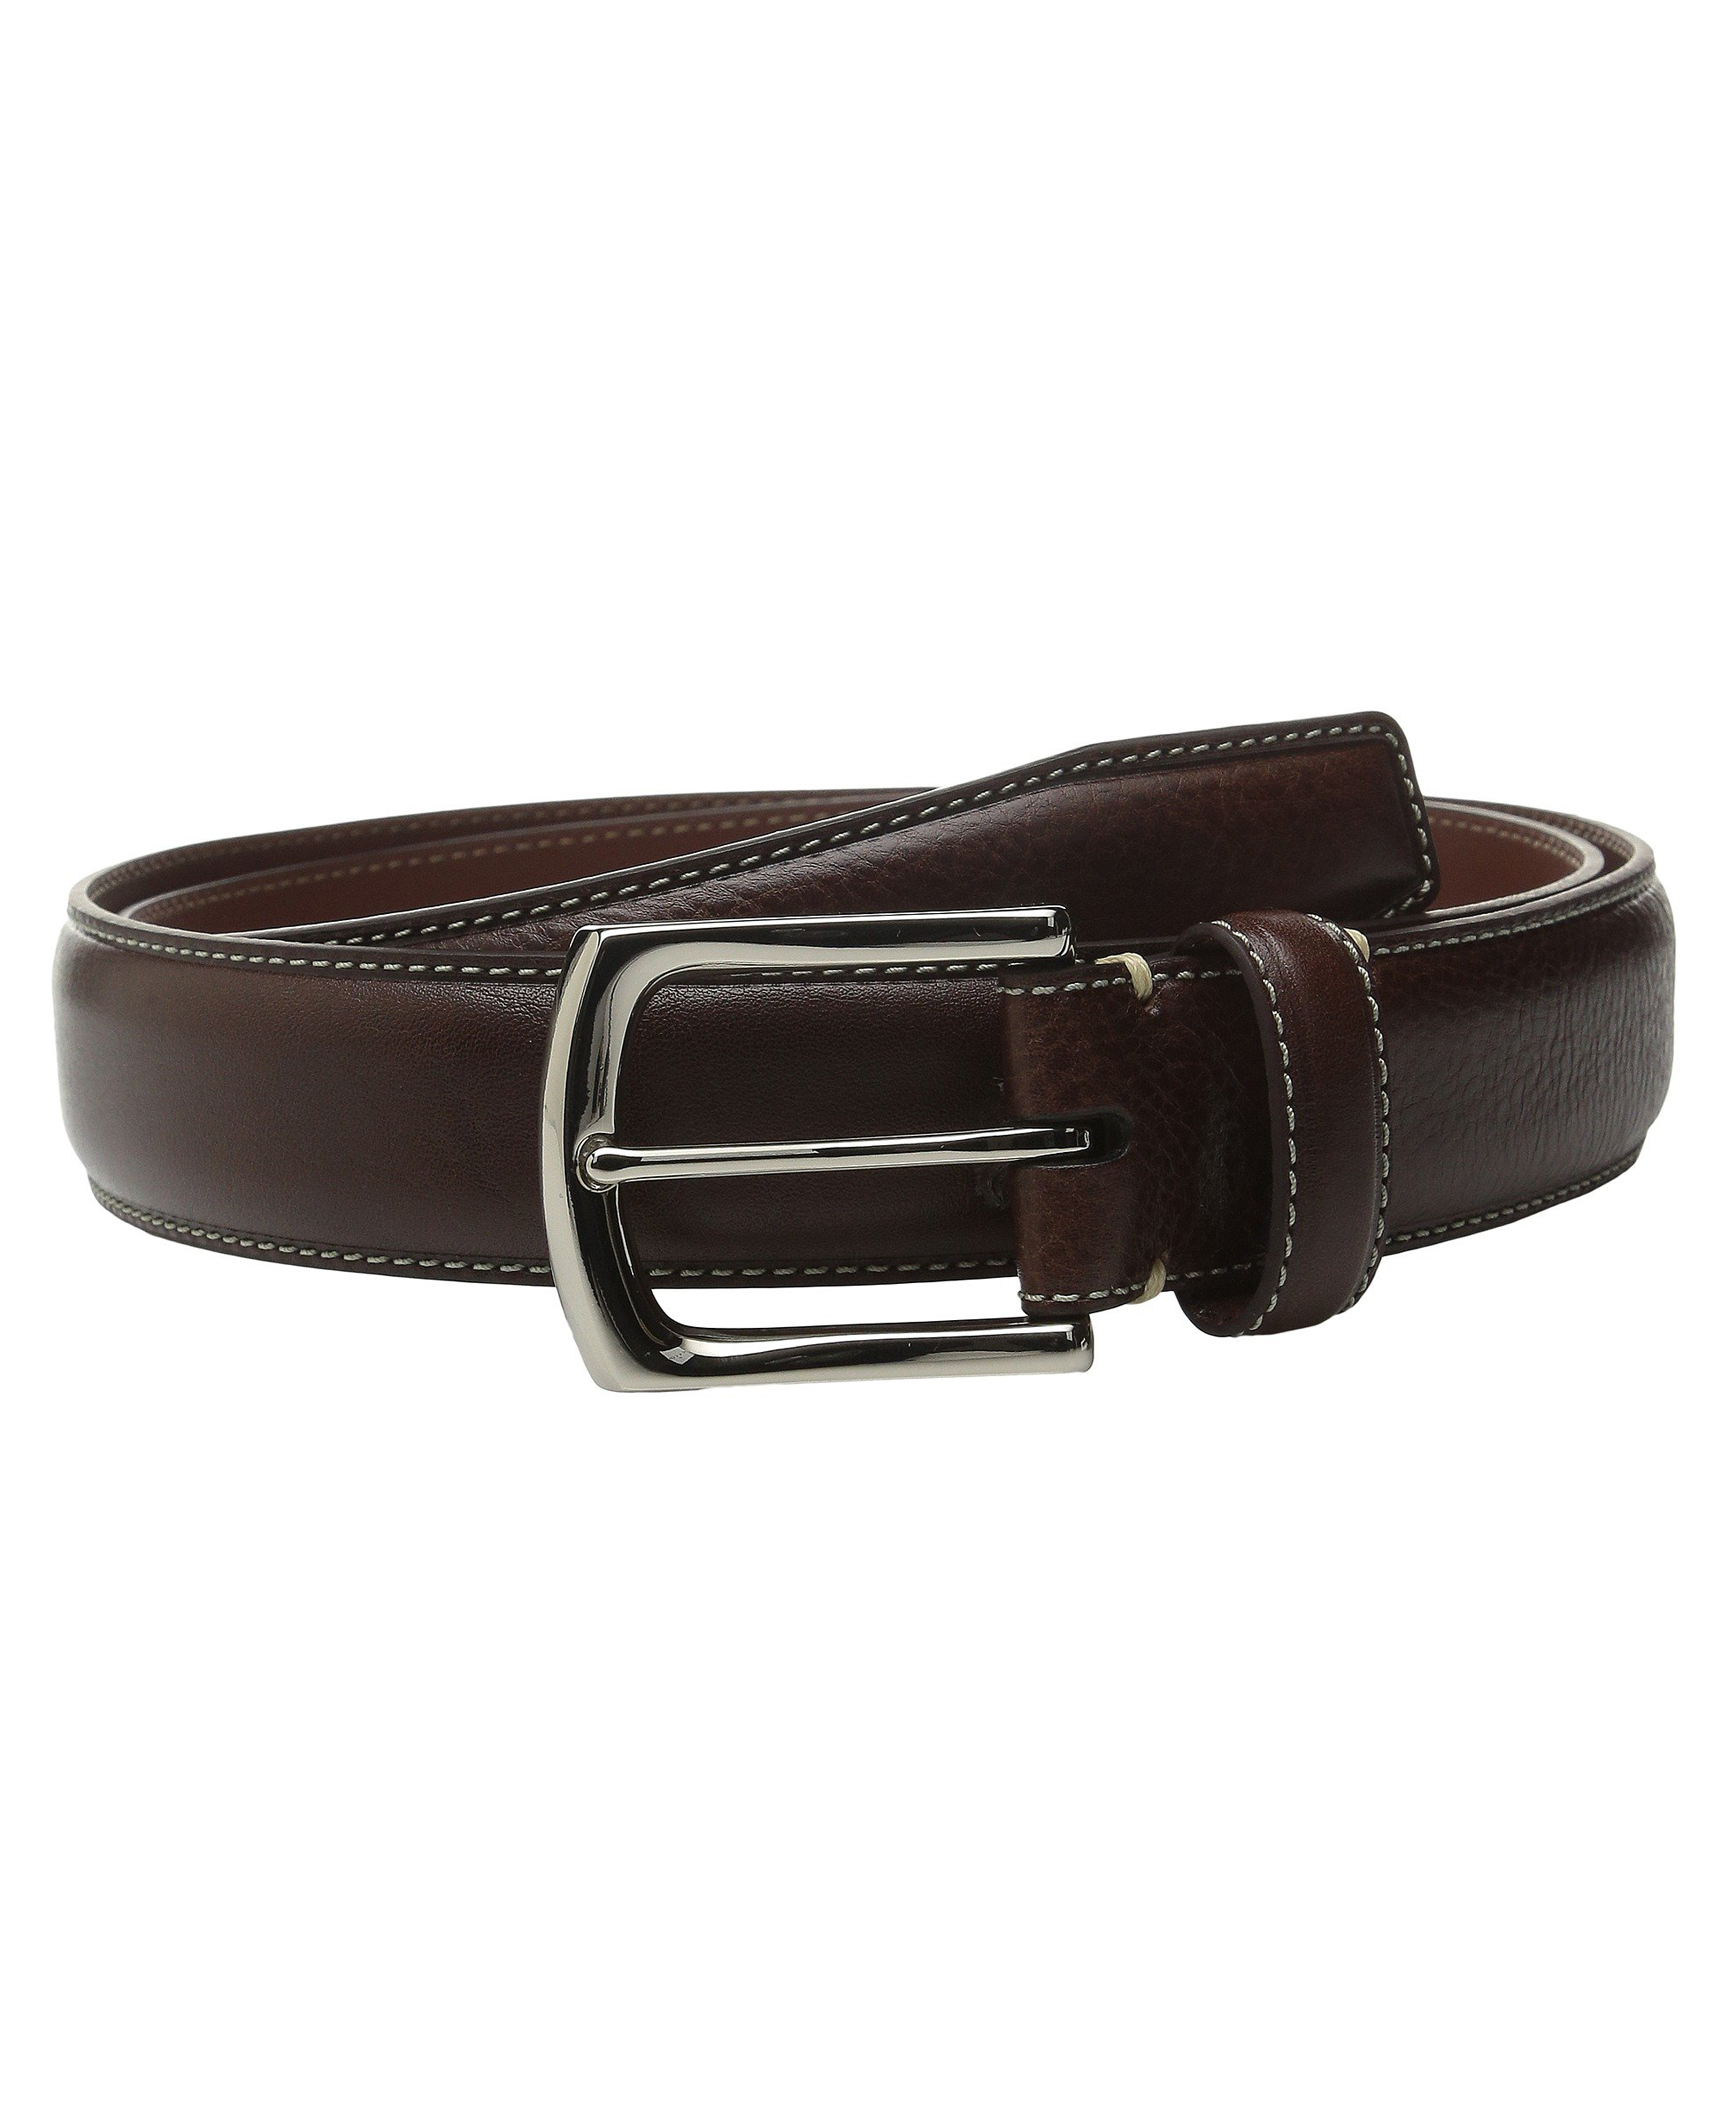 Torino leather belt